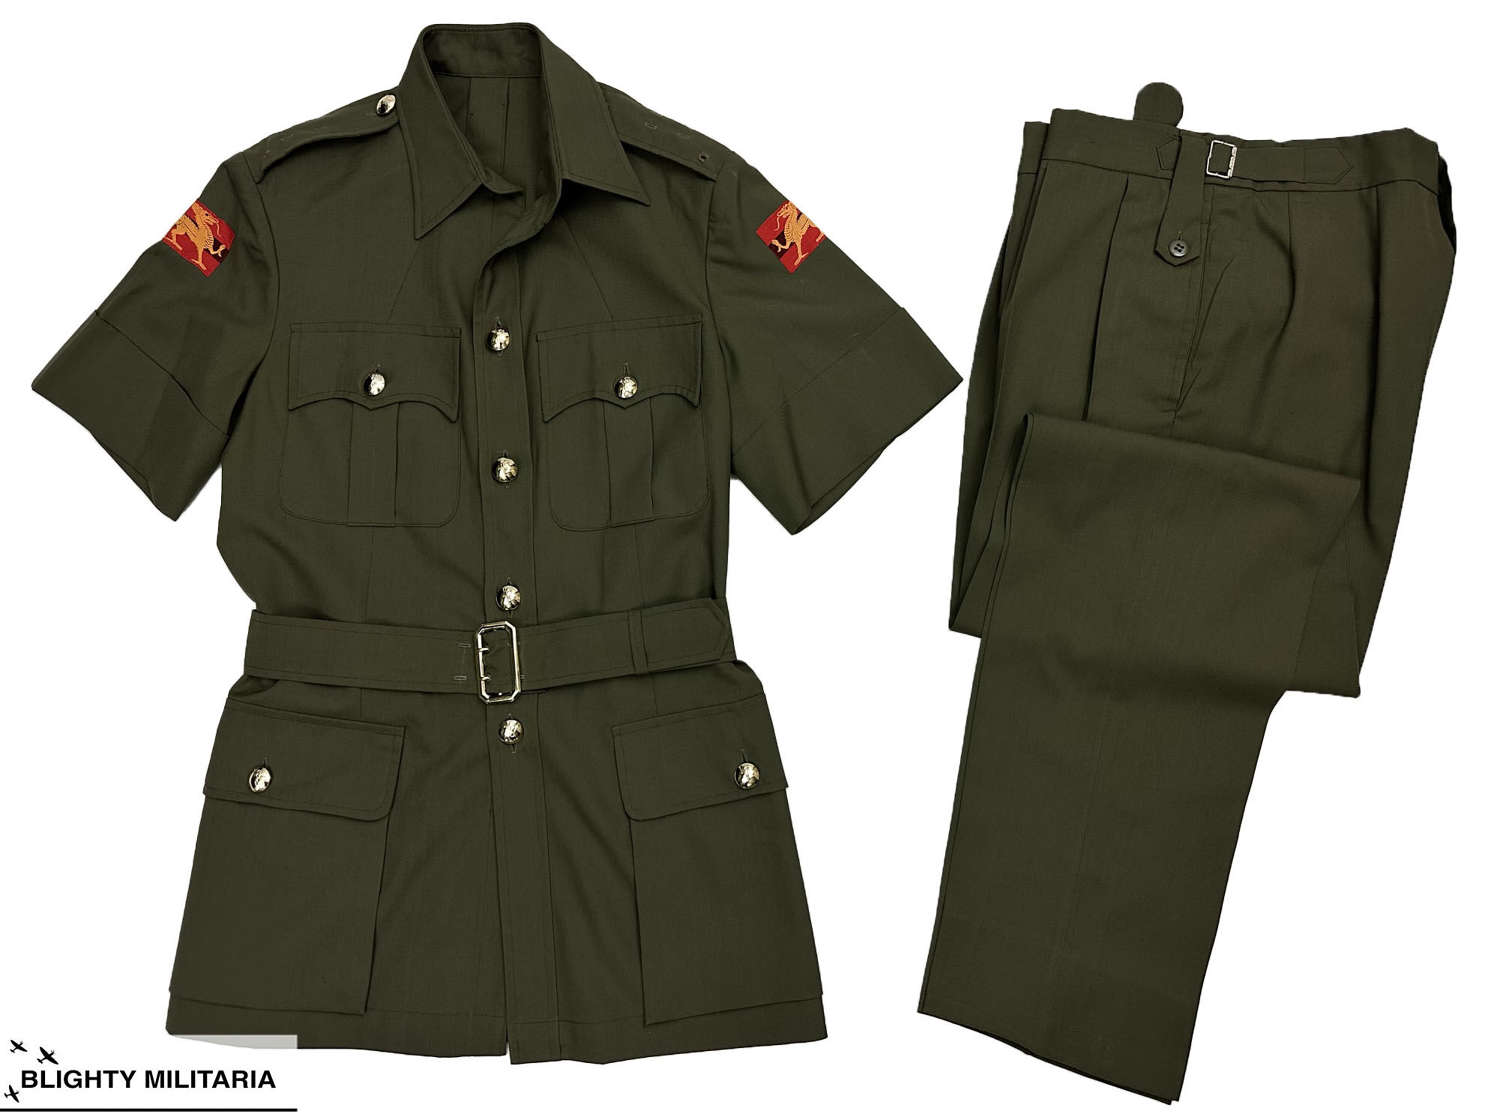 Original 1950s British Army Officer's Jungle Green Uniform